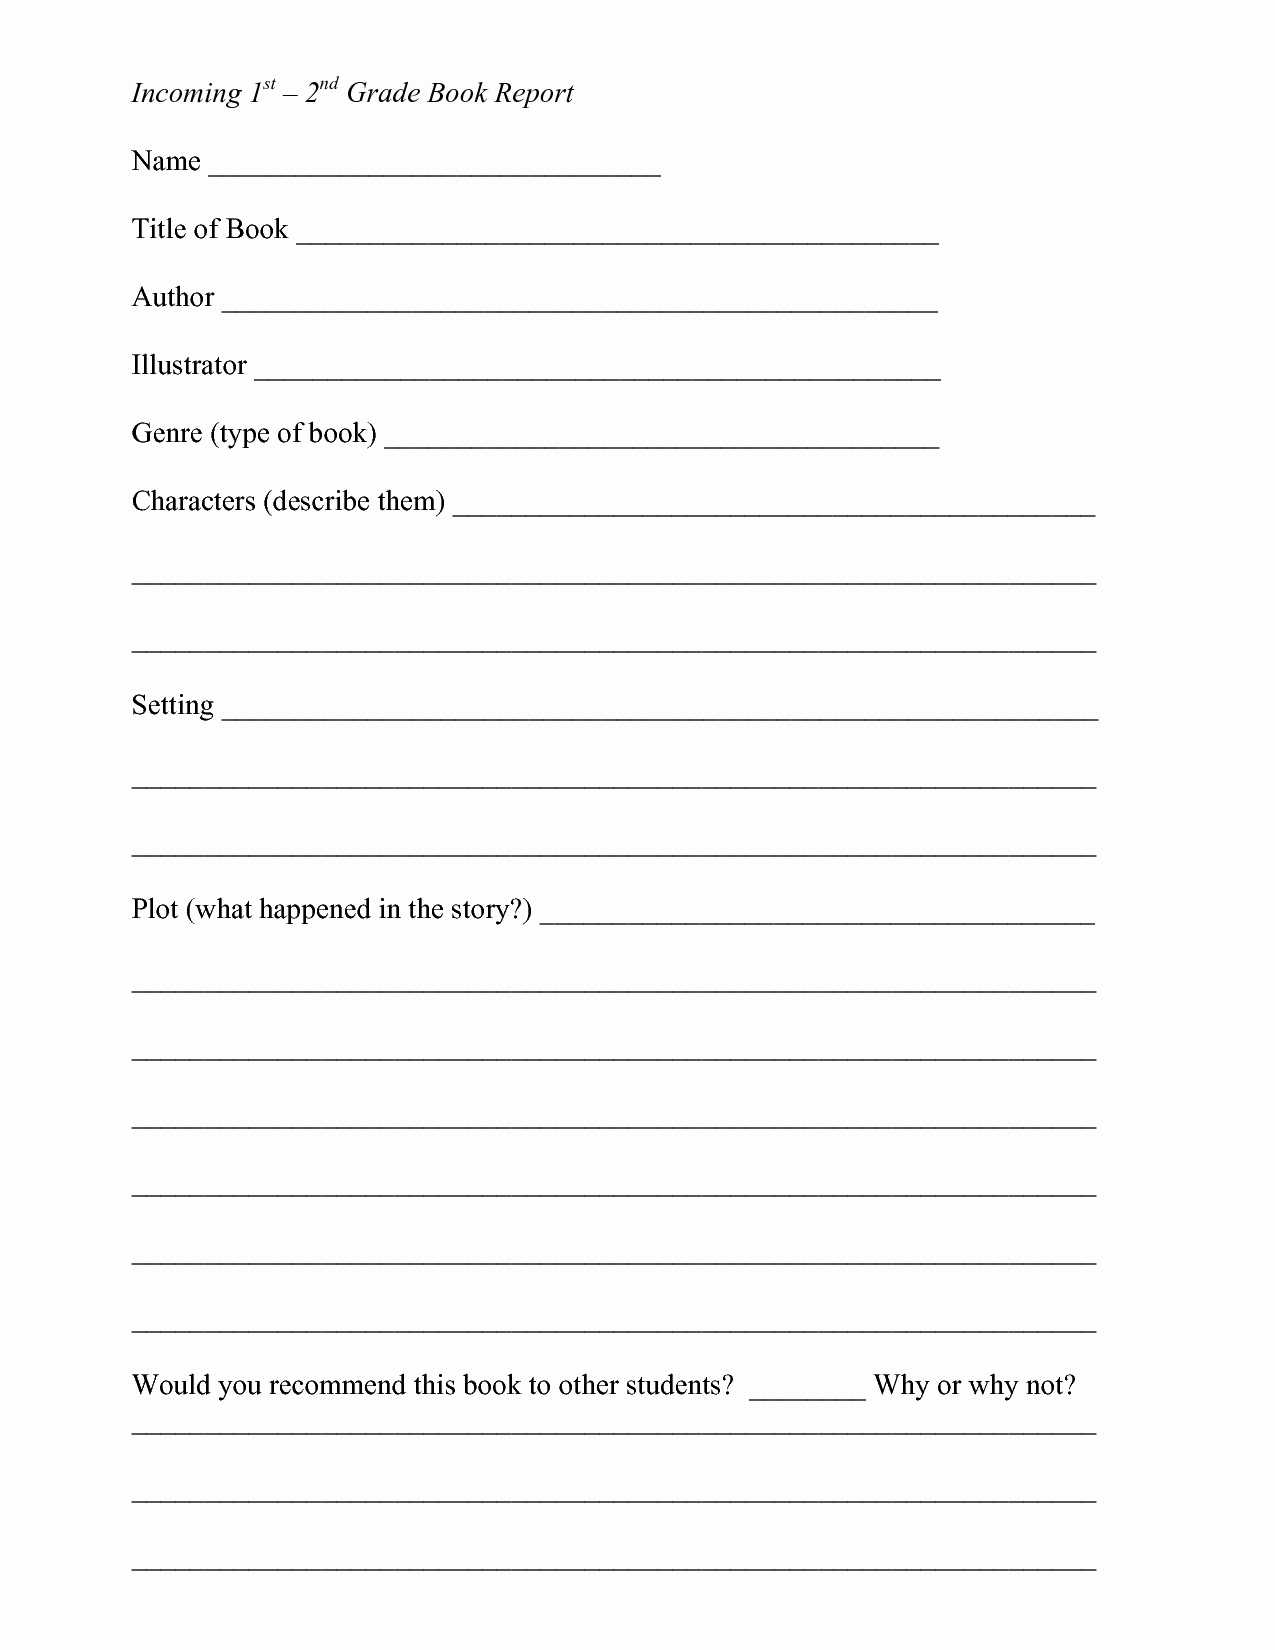 1St Grade Book Report Worksheets | Printable Worksheets And Inside 1St Grade Book Report Template